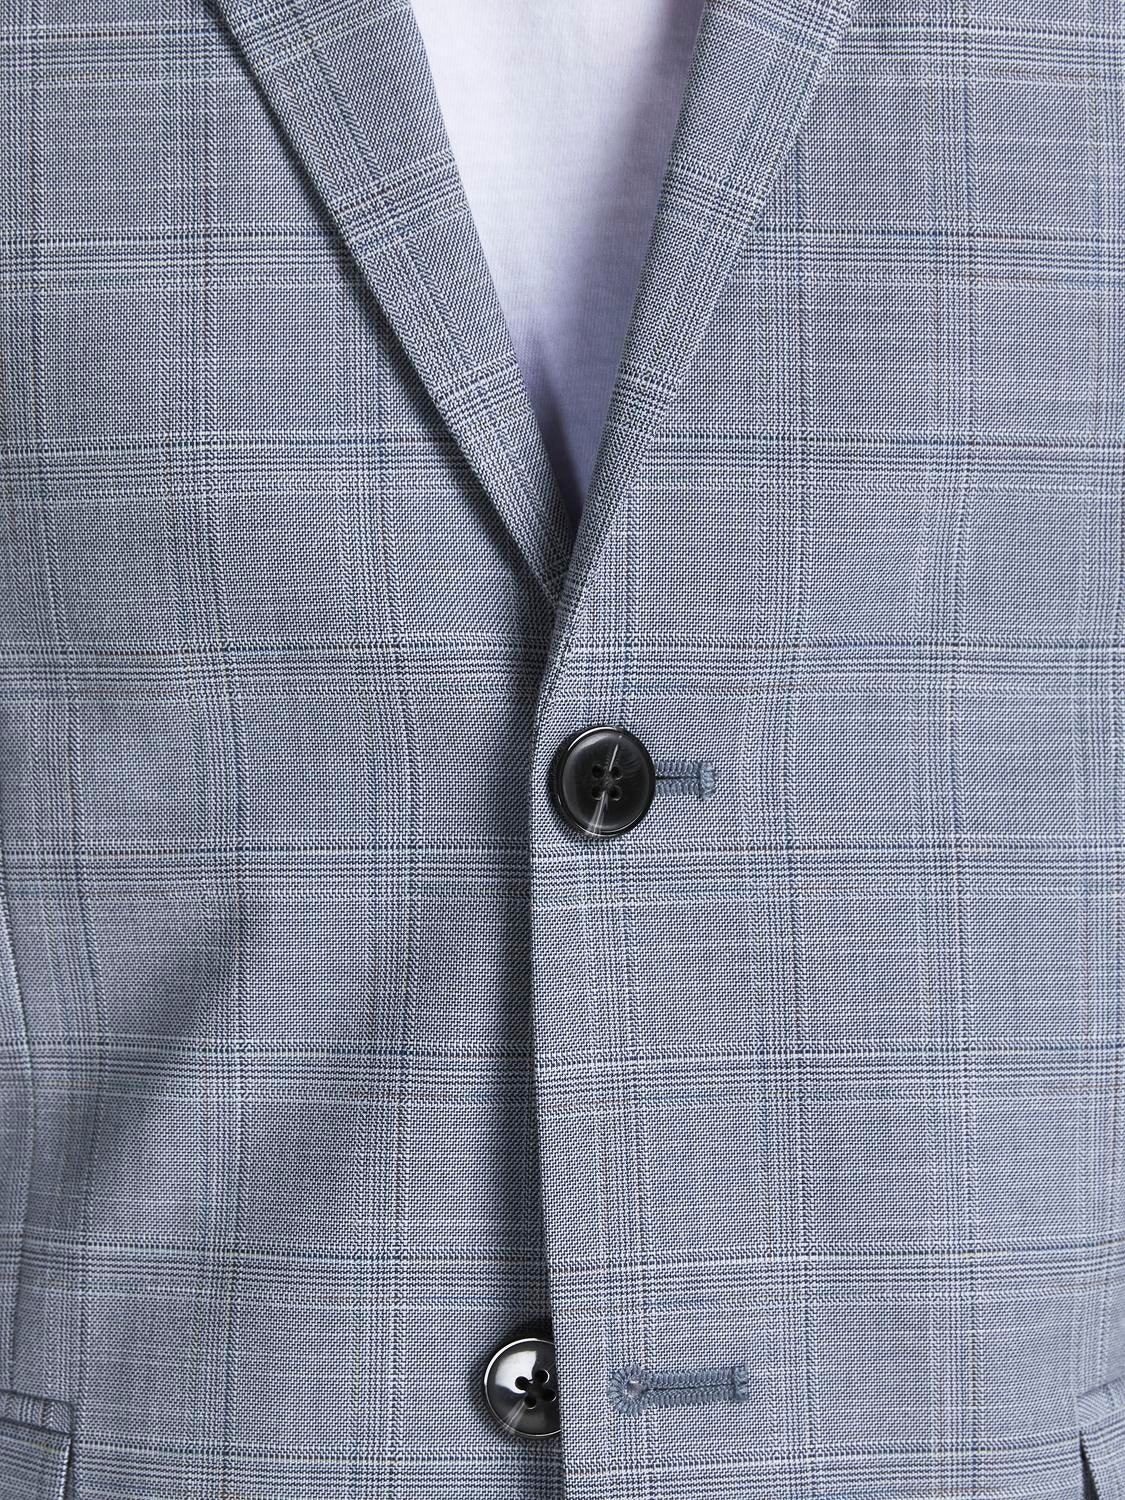 Jack & Jones JPRFRANCO Super Slim Fit Suit -Ashley Blue - 12183530